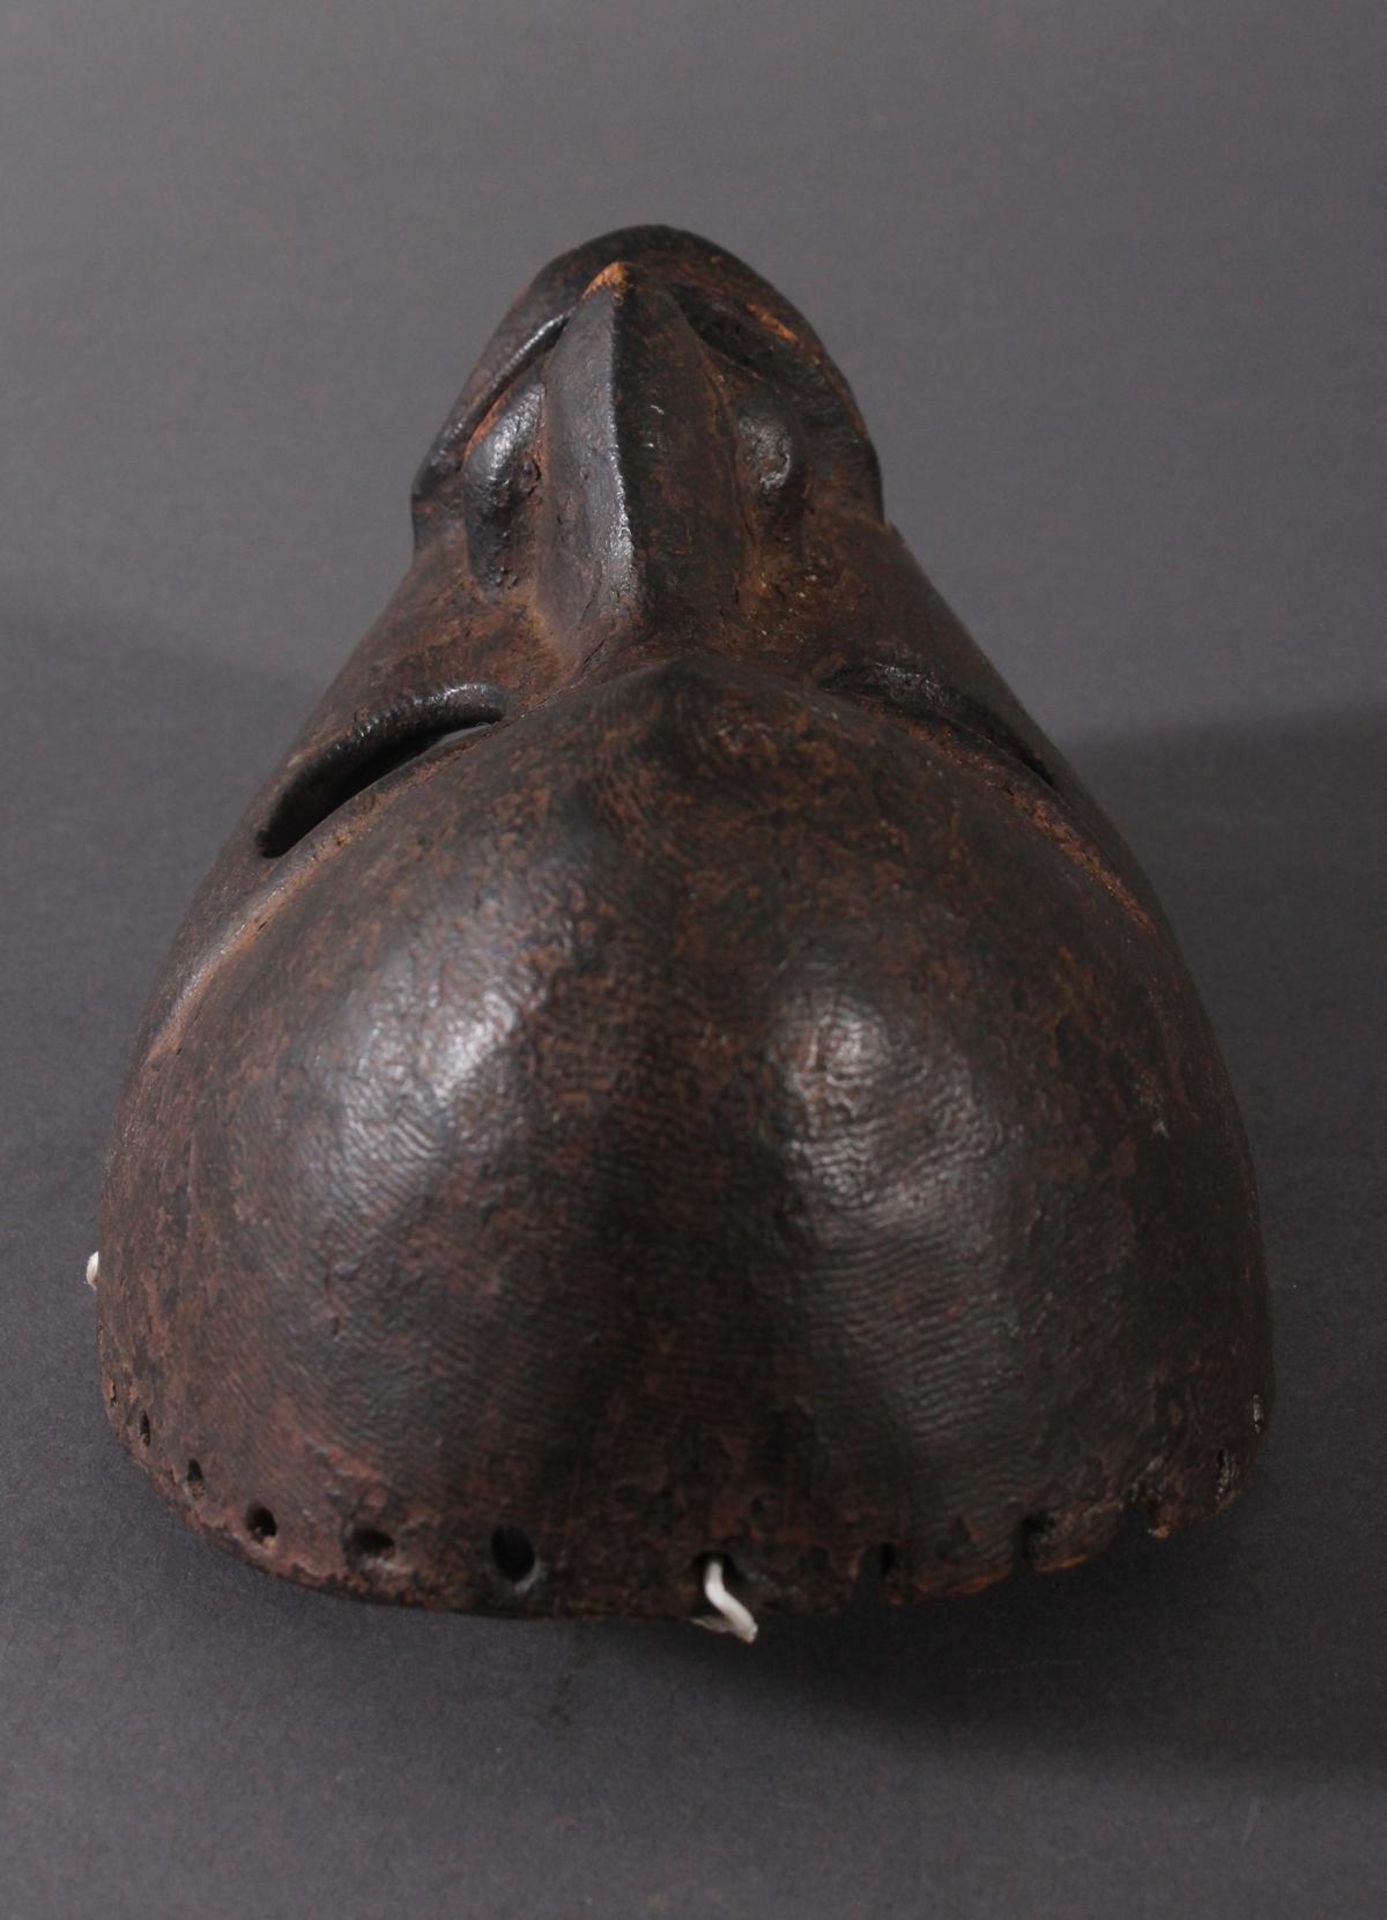 Antike Maske, Dan, Liberia. "Feuermelder", 1. Hälfte 20. Jh.Holz geschnitzt, dunkle Patina, - Bild 5 aus 6